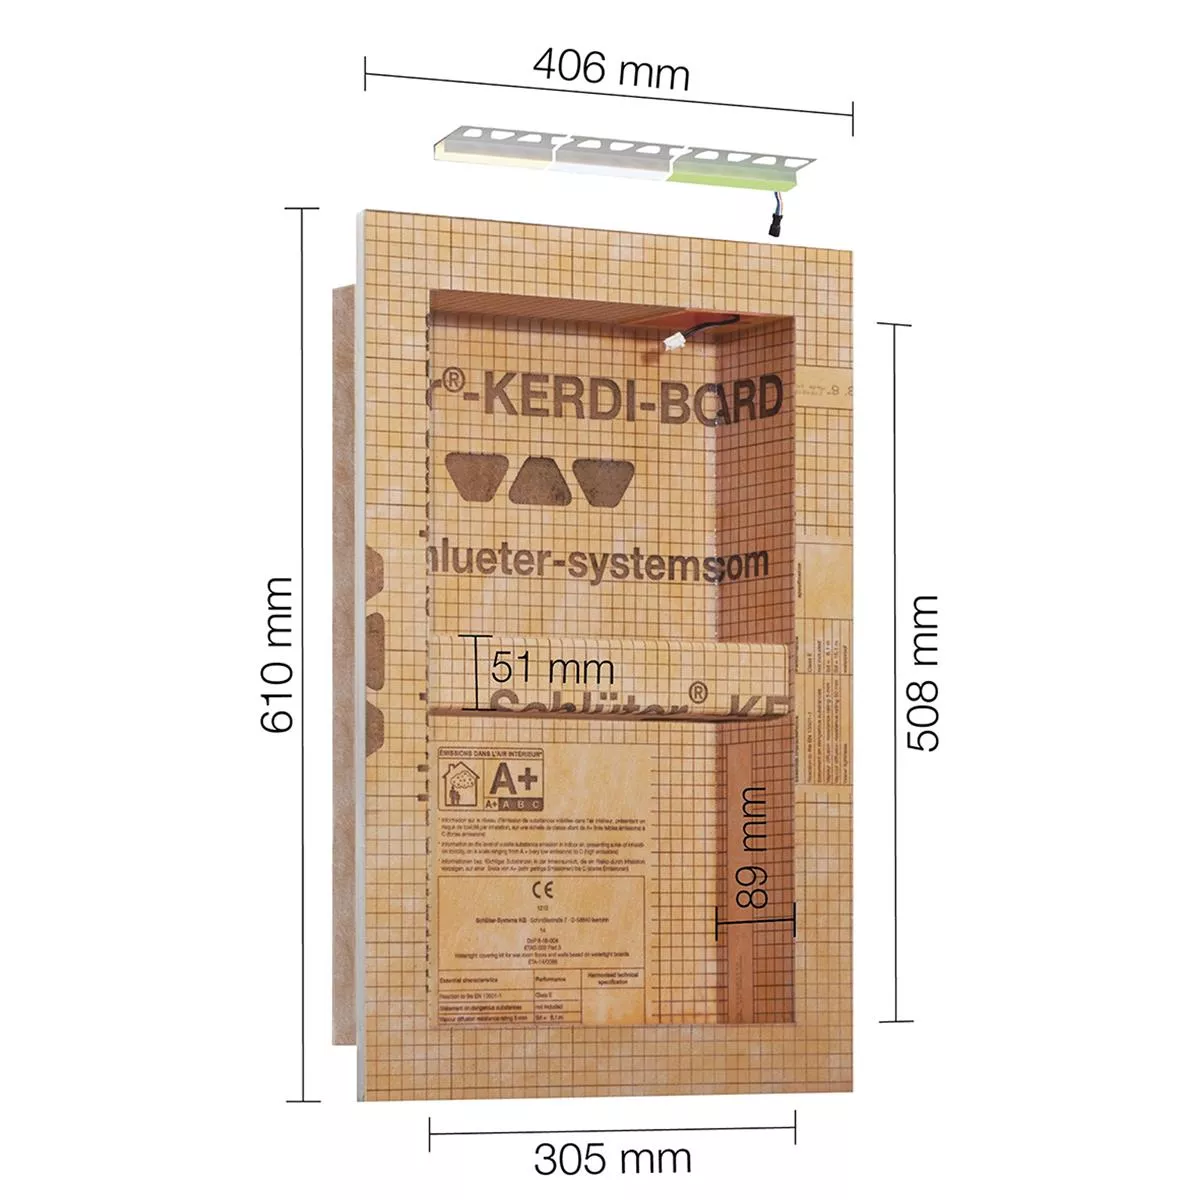 Schlüter Kerdi Board NLT juego de nicho iluminación LED blanco cálido 30,5x50,8x0,89 cm